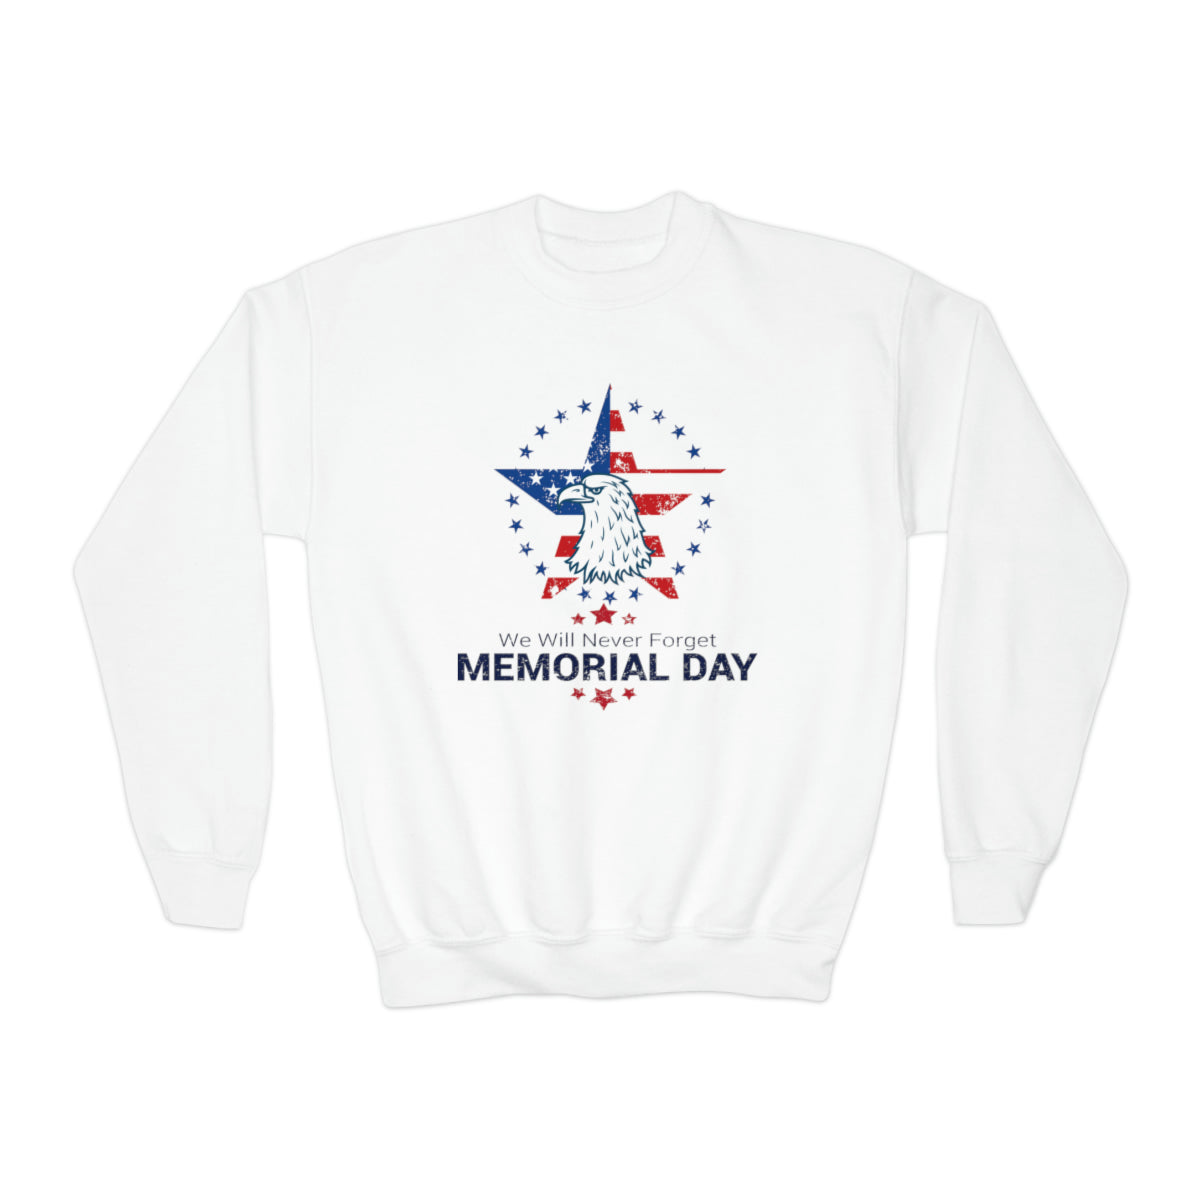 Memorial Day Graphic Crewneck Sweatshirt